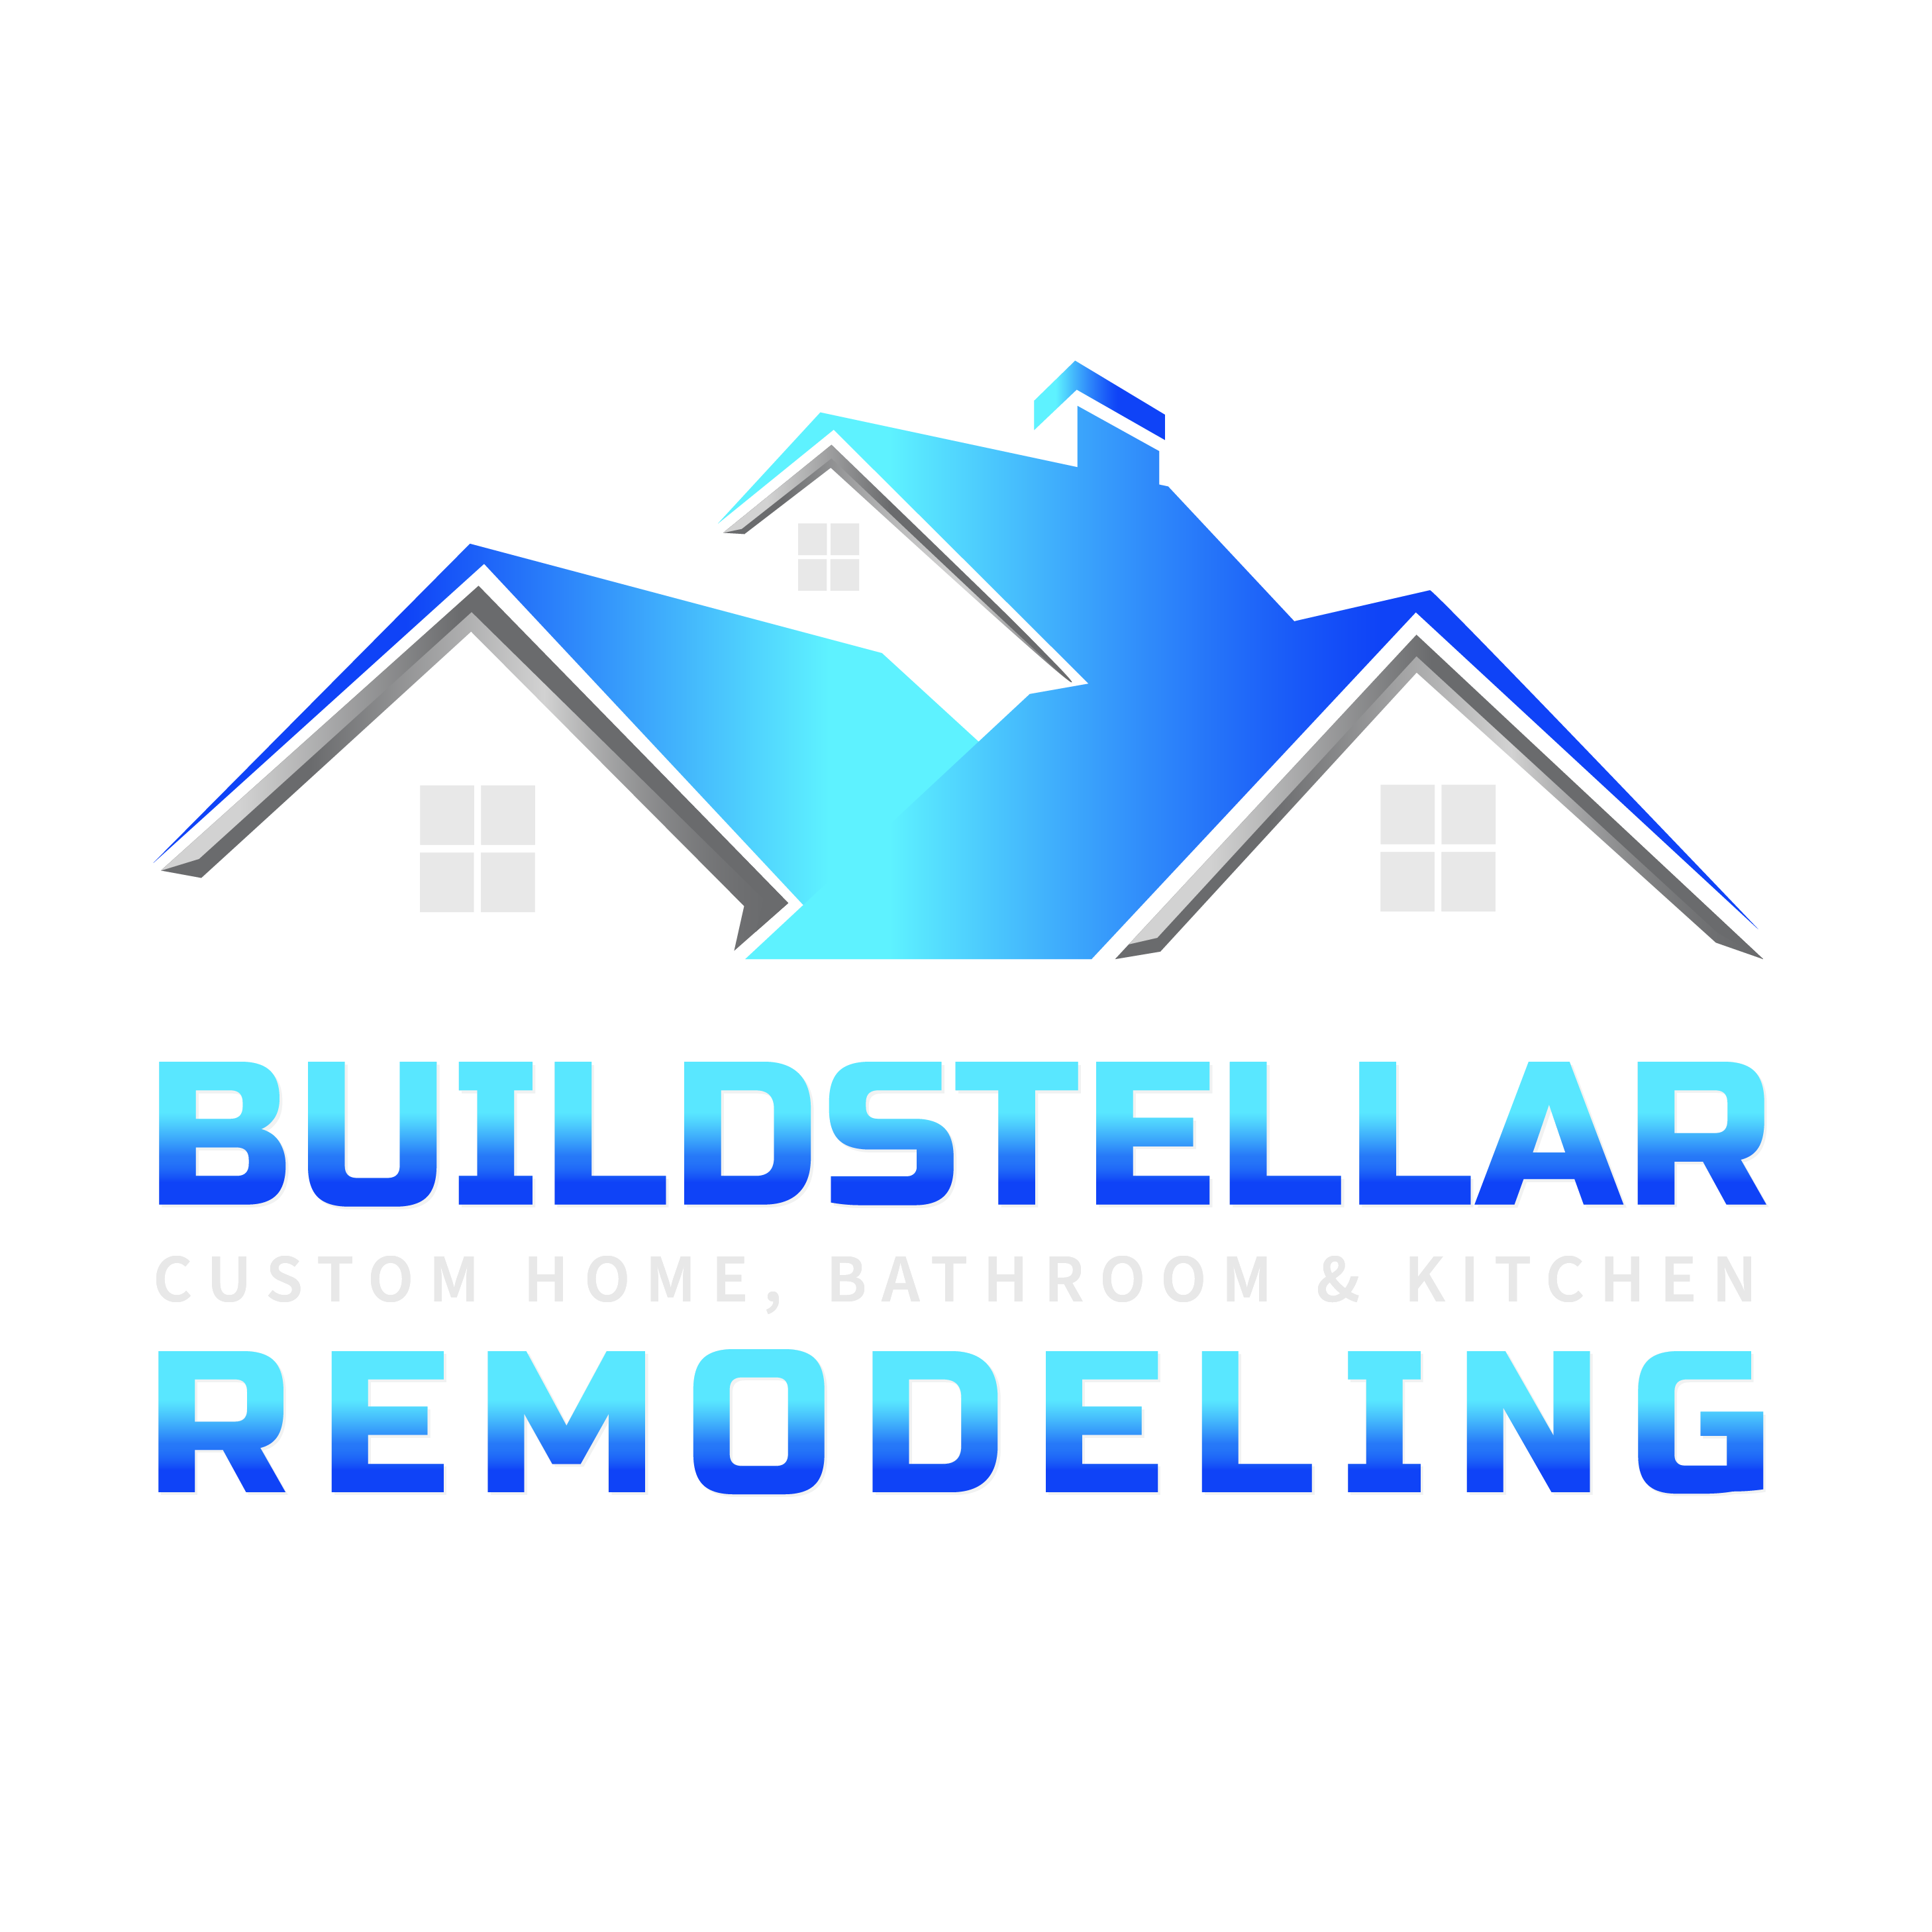 BuildStellar Custom Home, Bathroom & Kitchen Remodeling Colored Square Logo